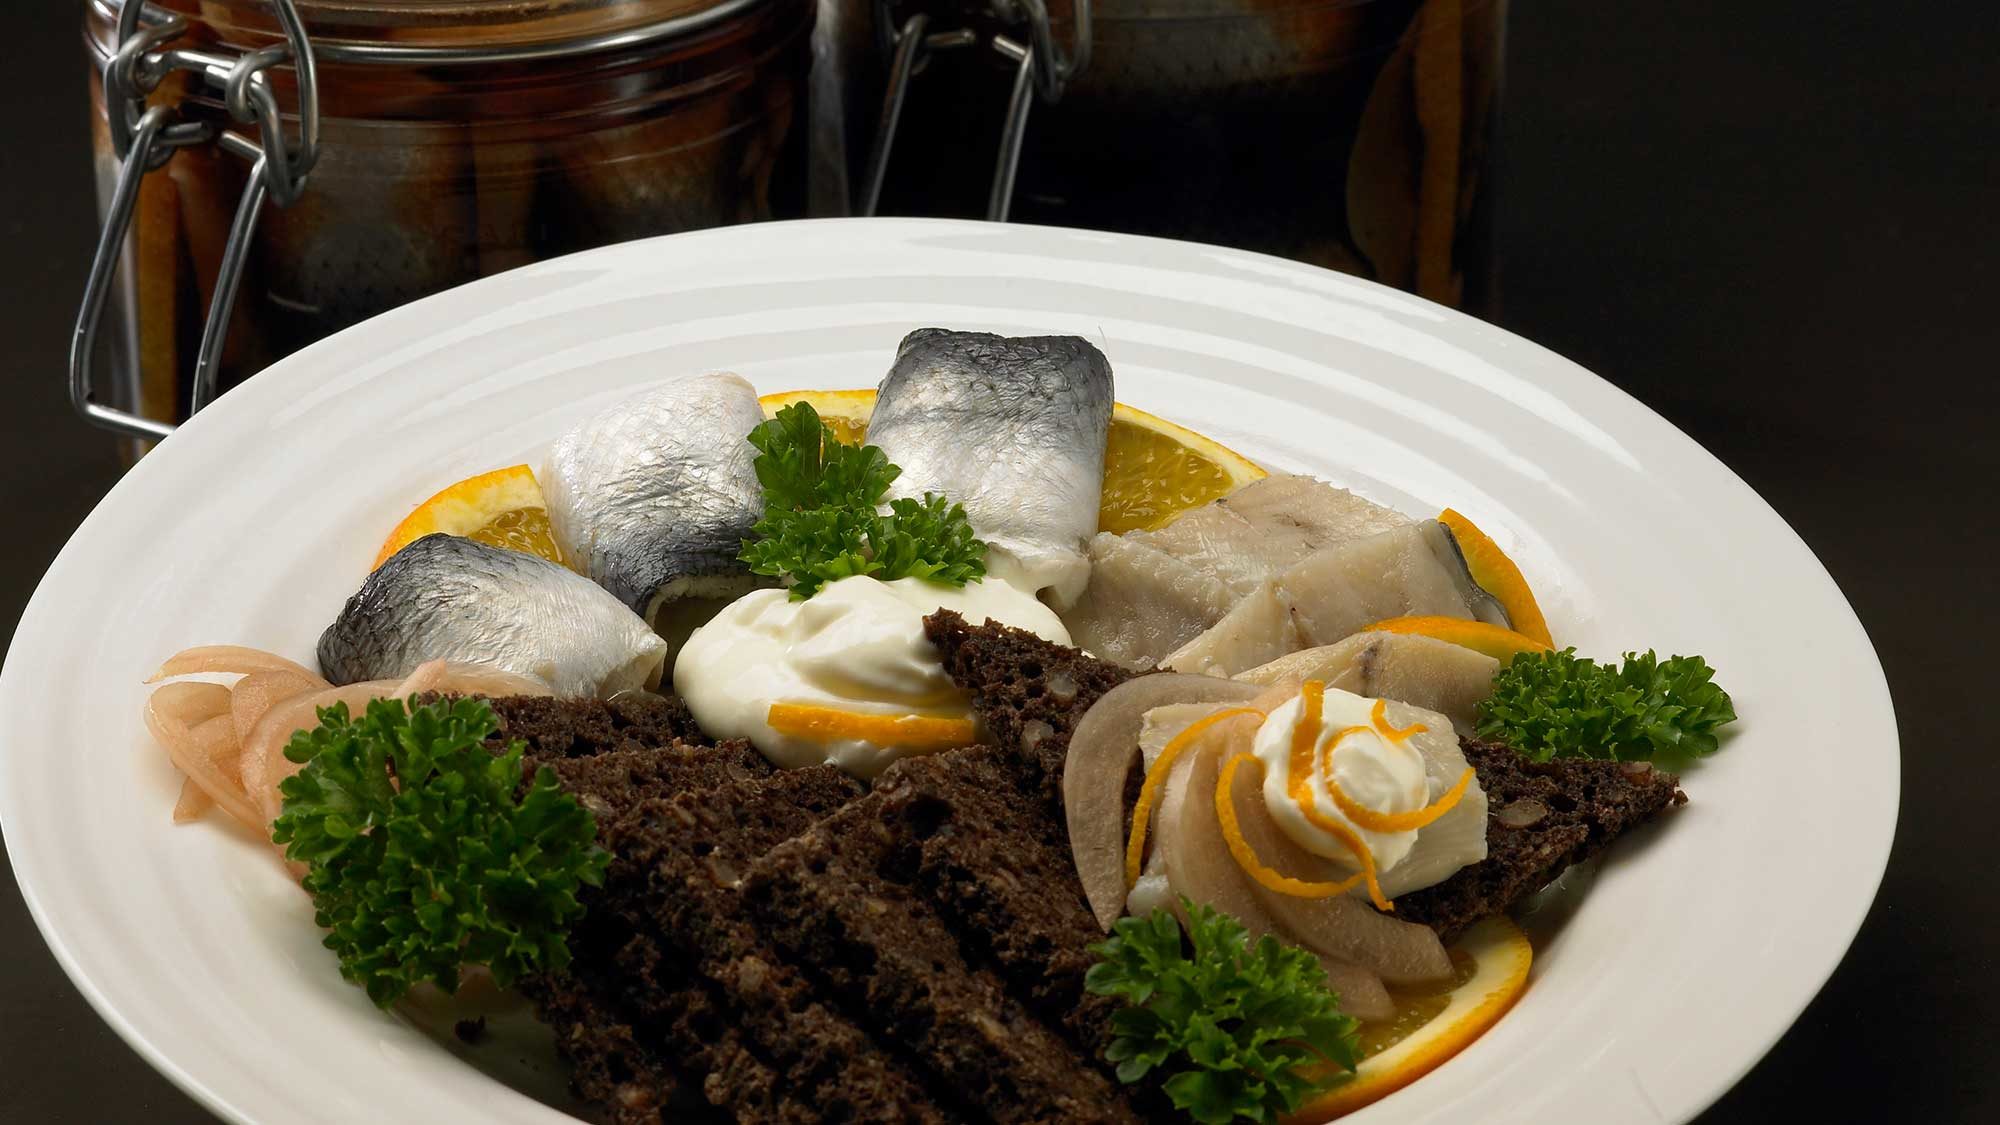 plated rollmops (herring in spiced vinegar)